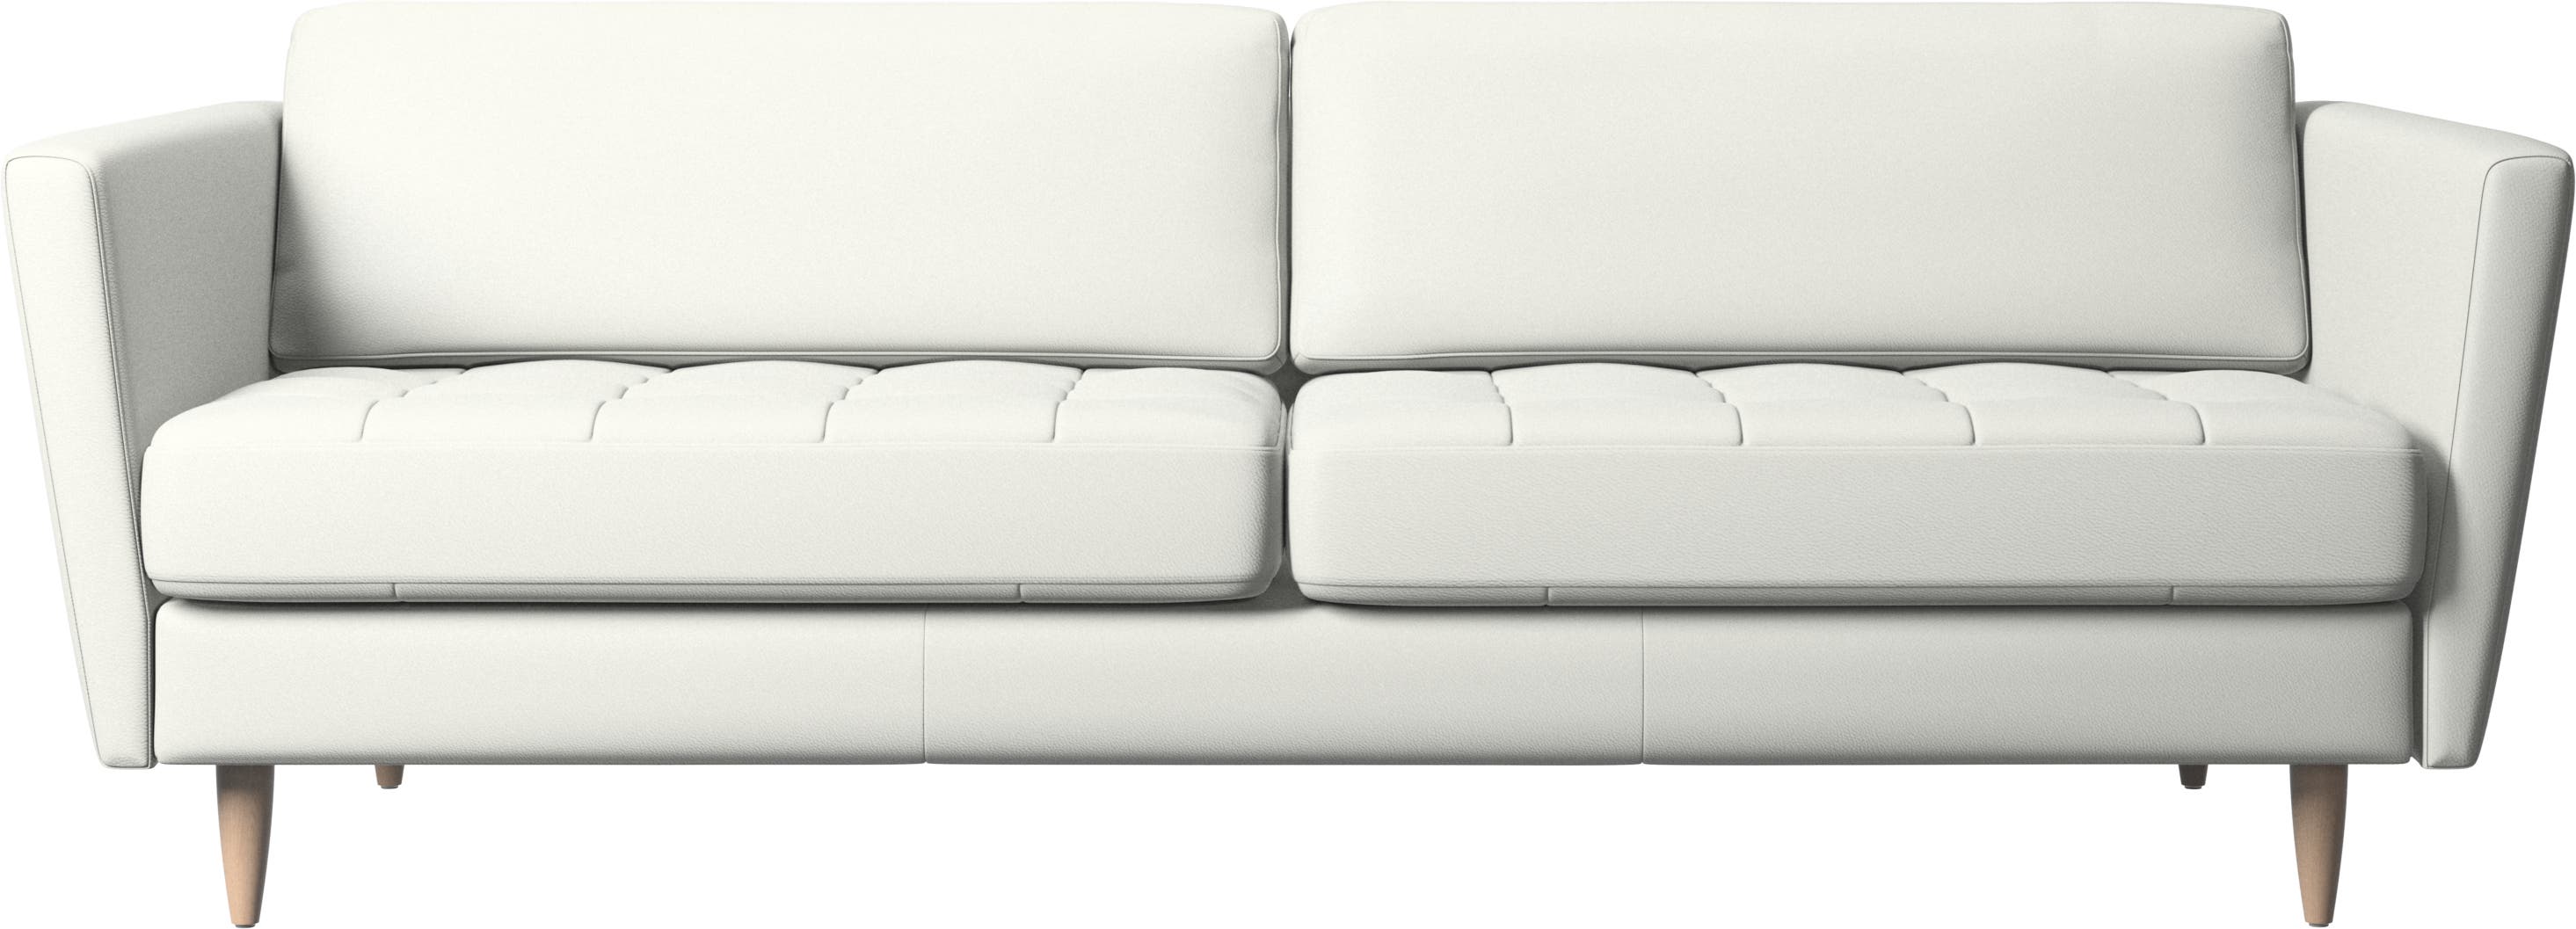 Osaka sofa, tufted seat